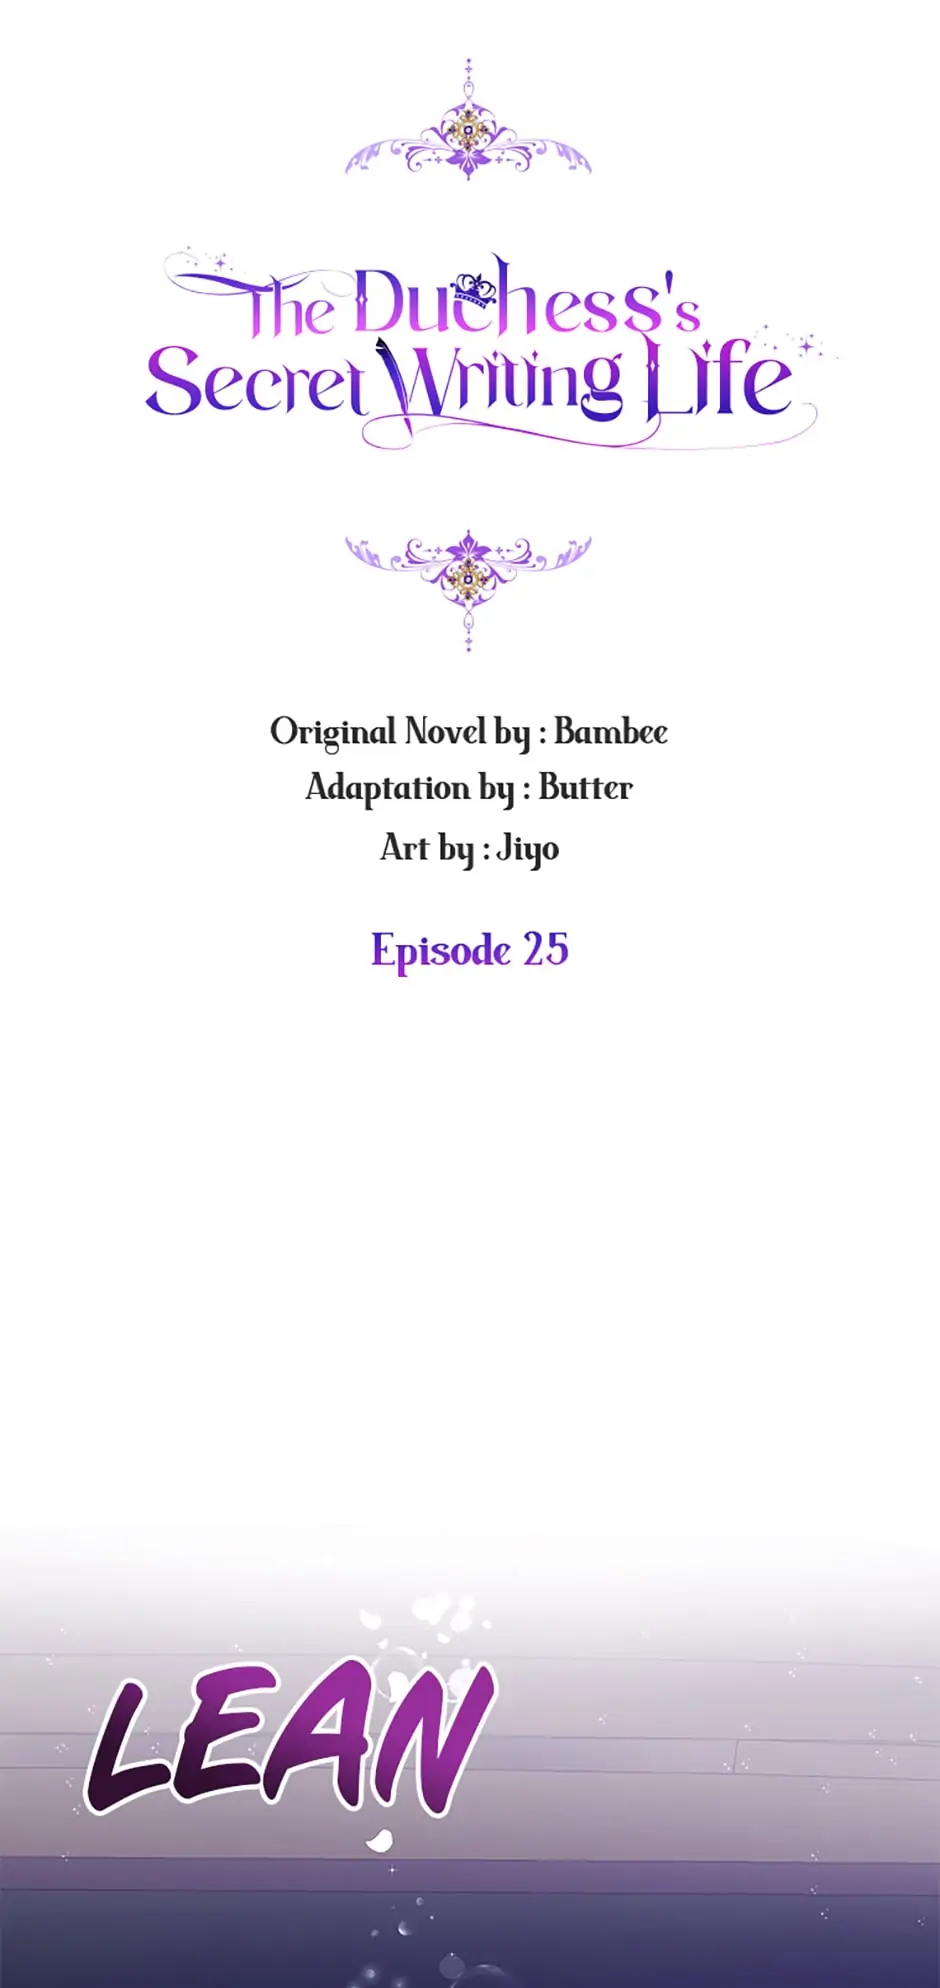 The Duchess’ Secret Writings chapter 25